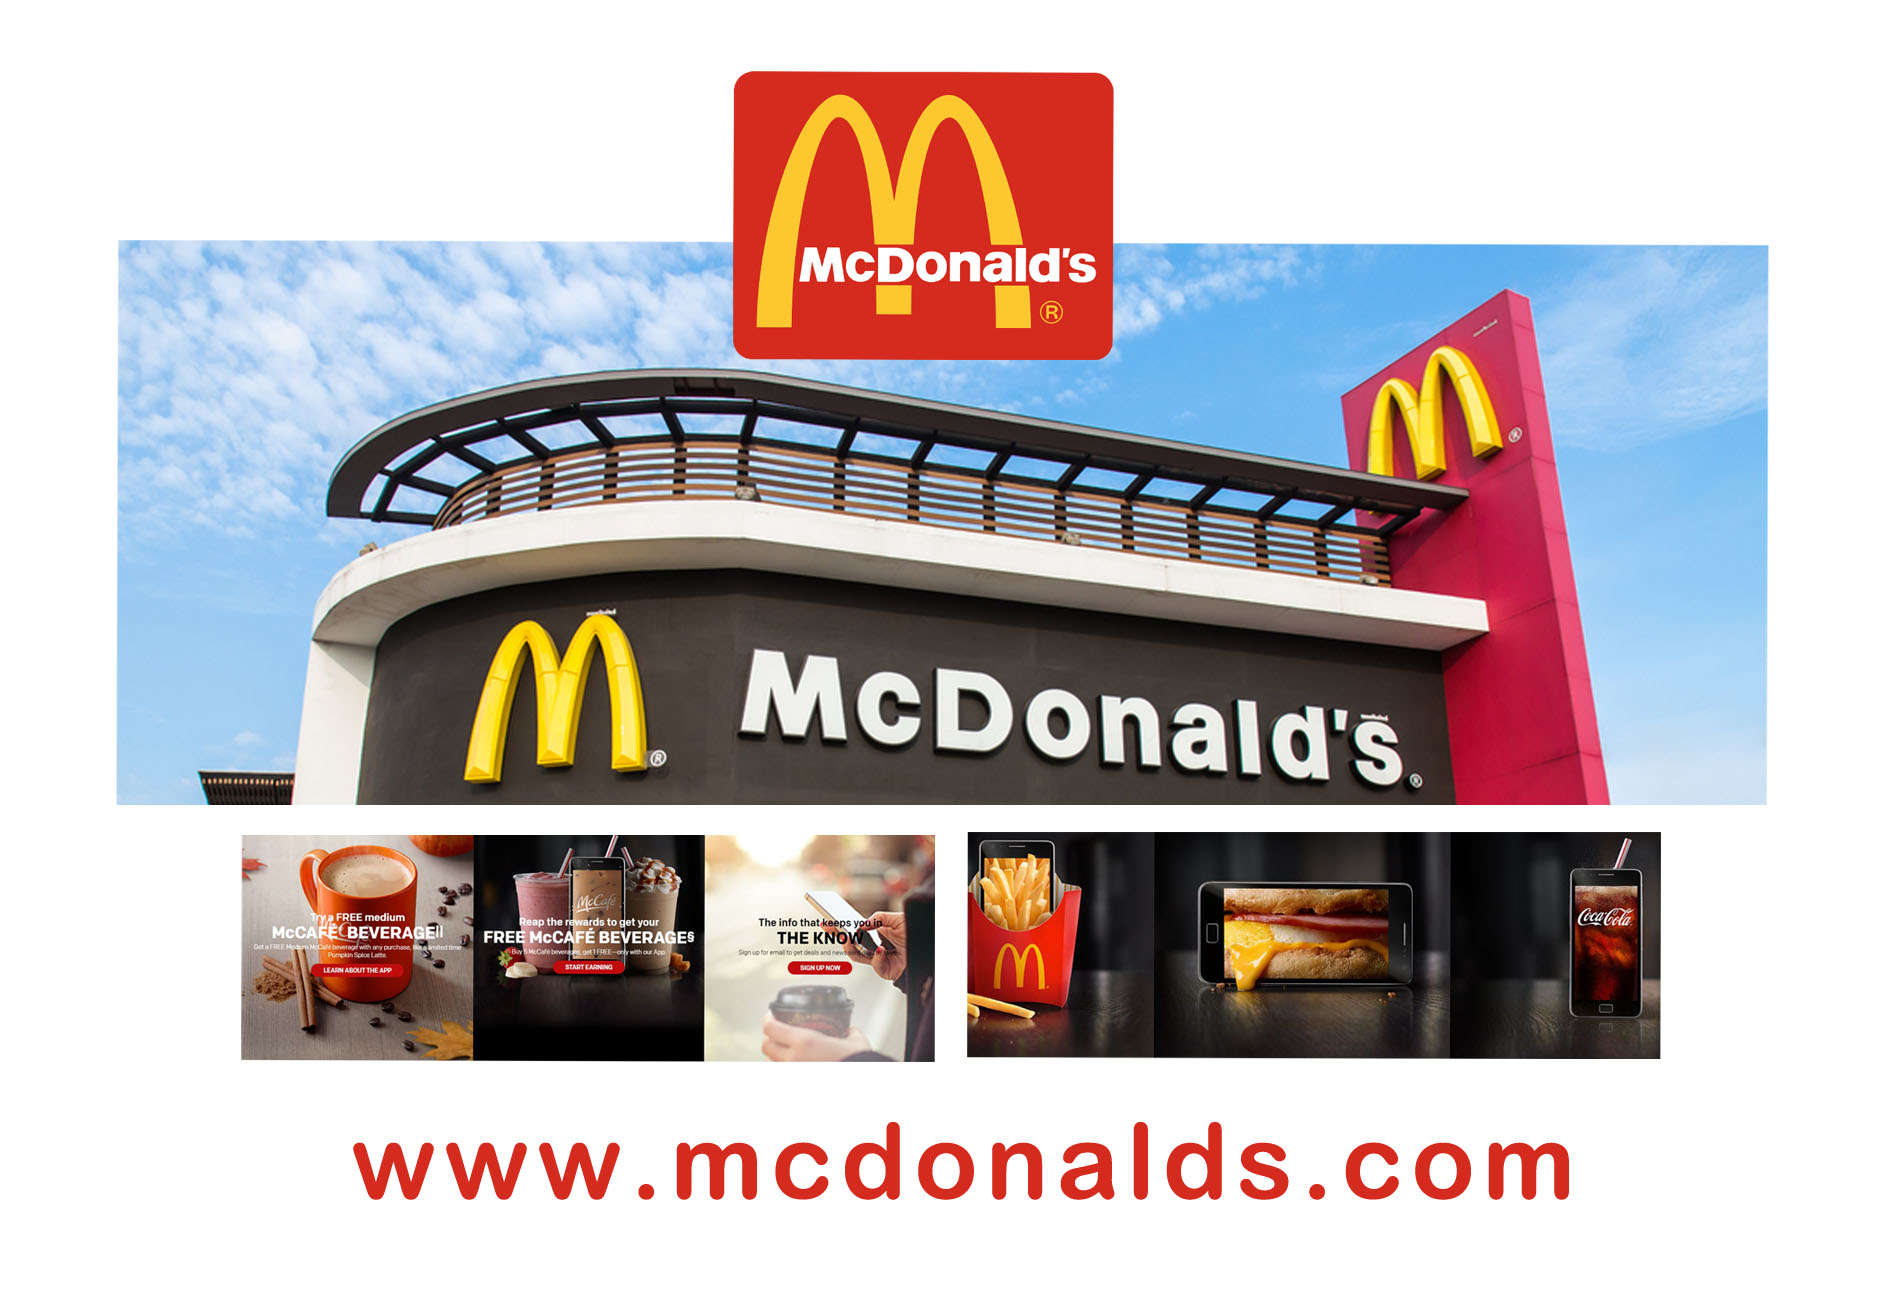 McDonalds - Burgers, Fries & Delicious Meals | www.mcdonalds.com